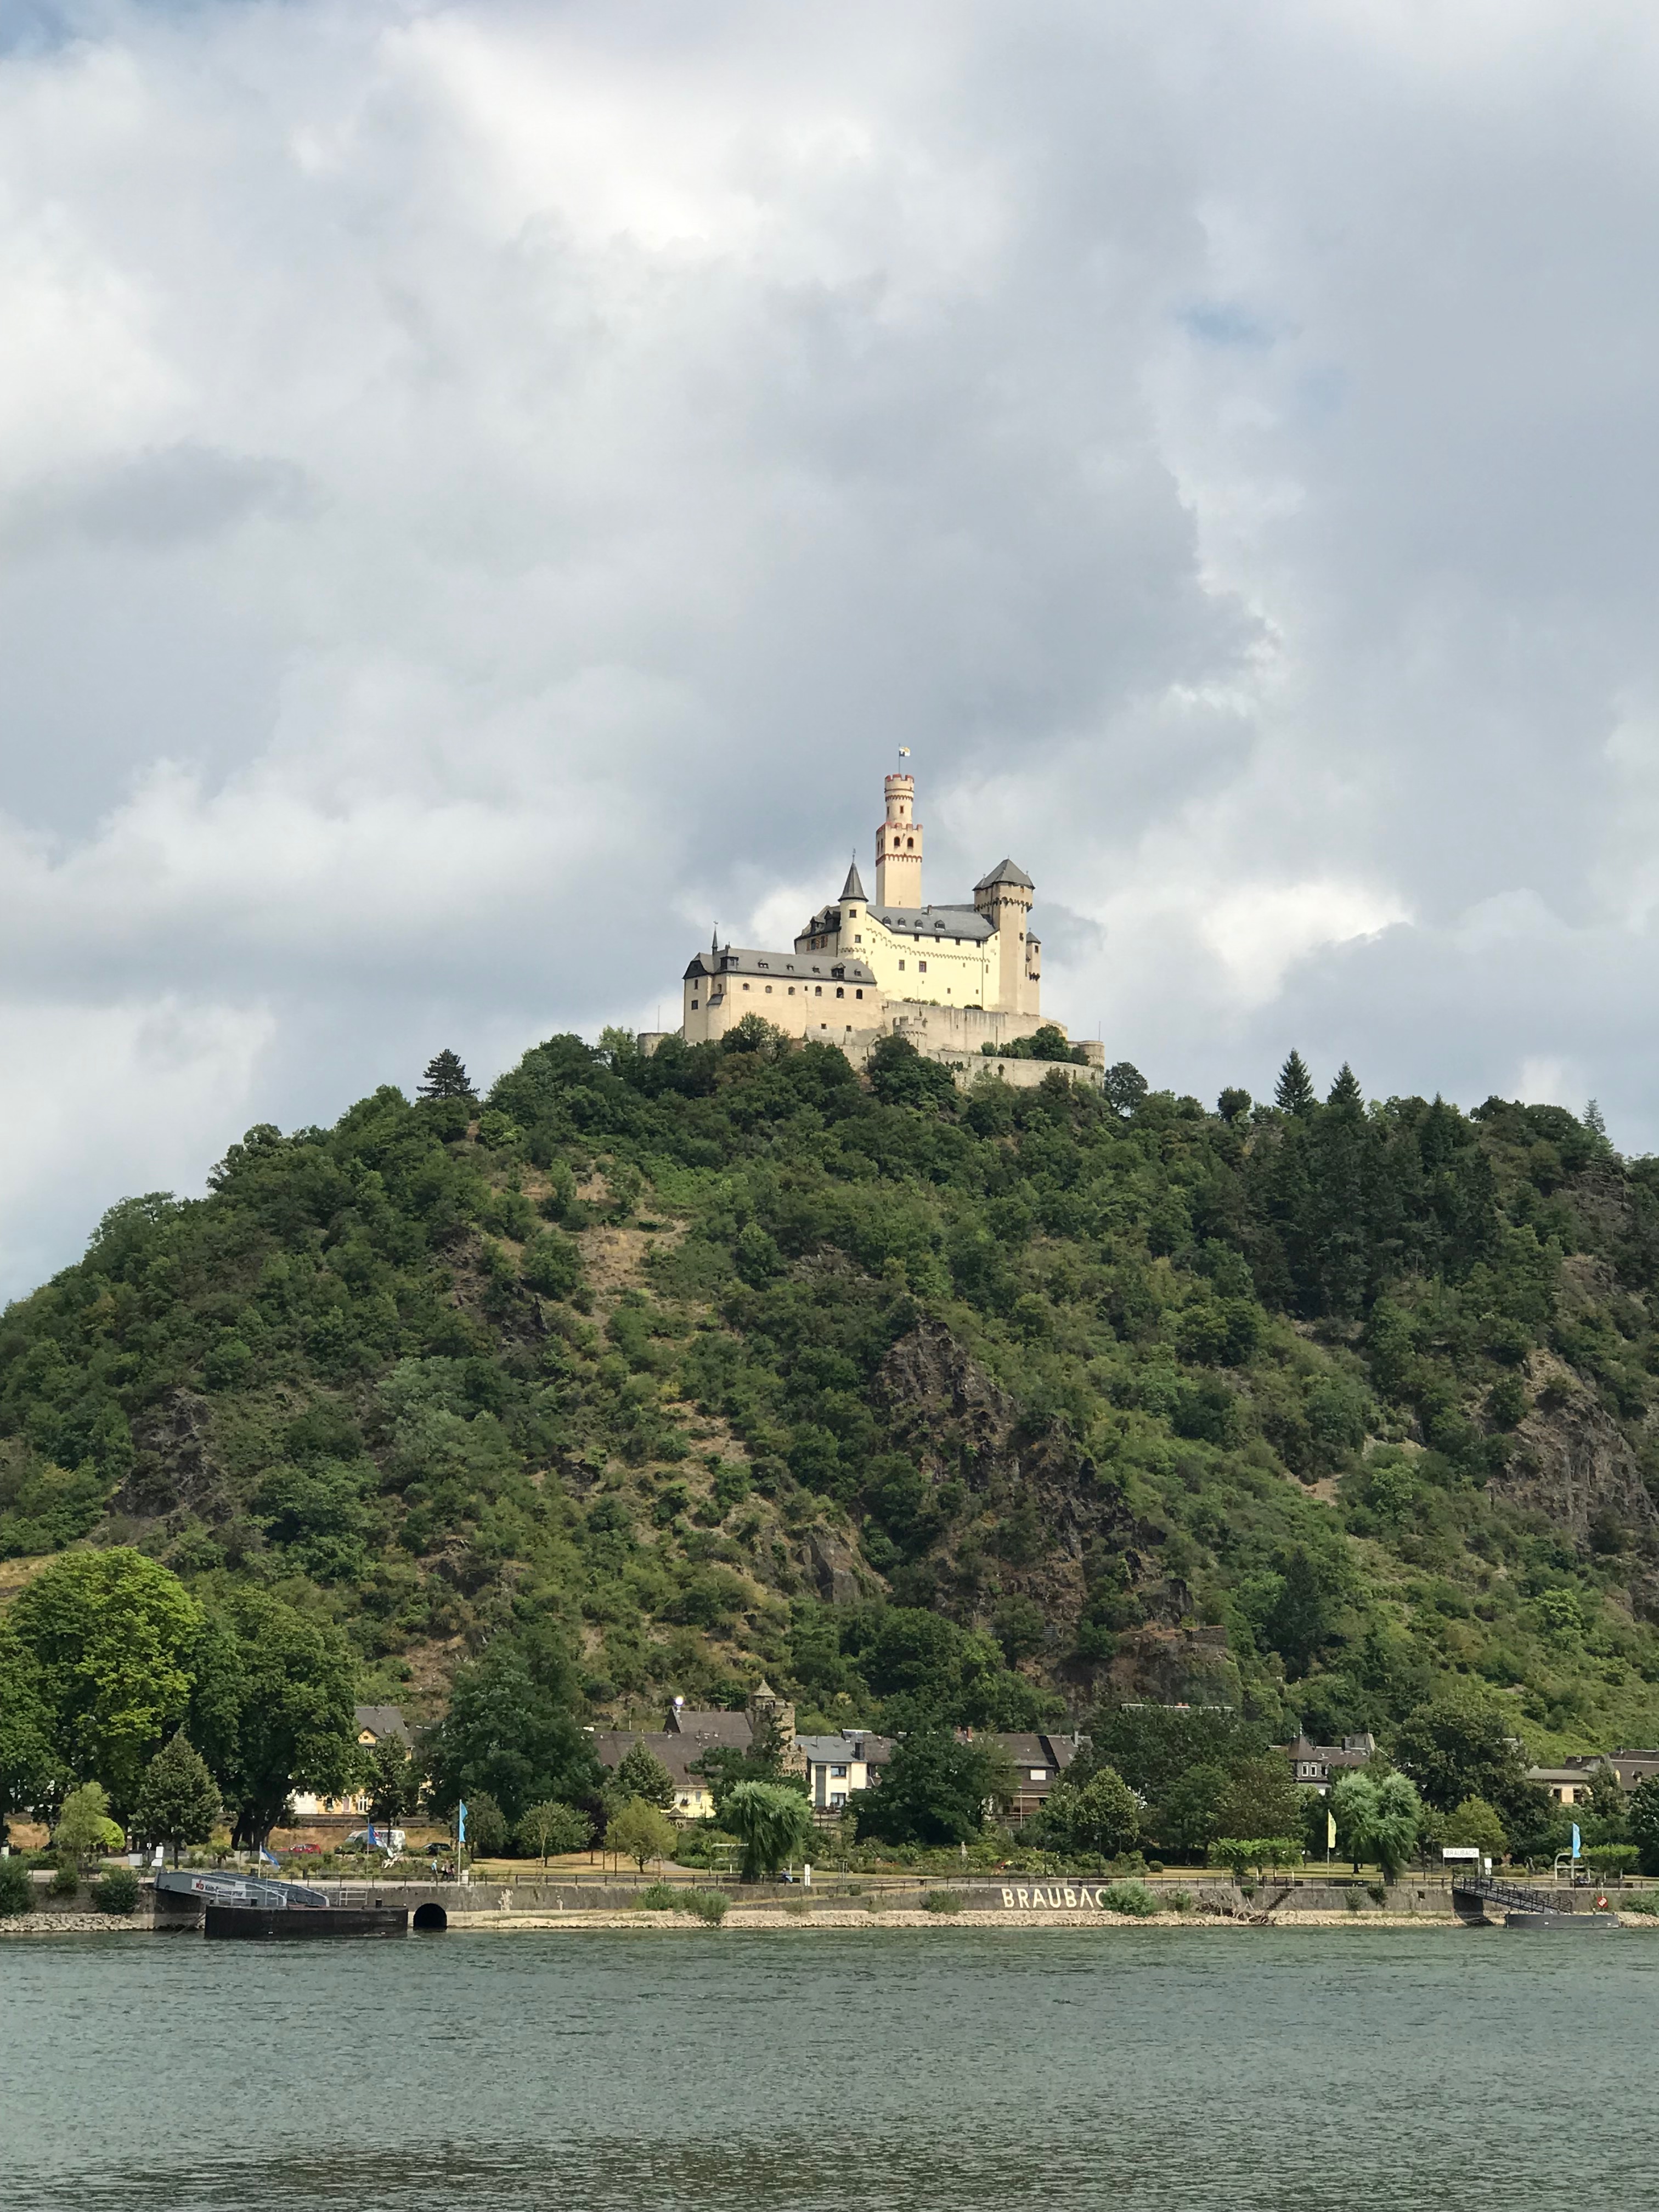 a castle on a hilltop